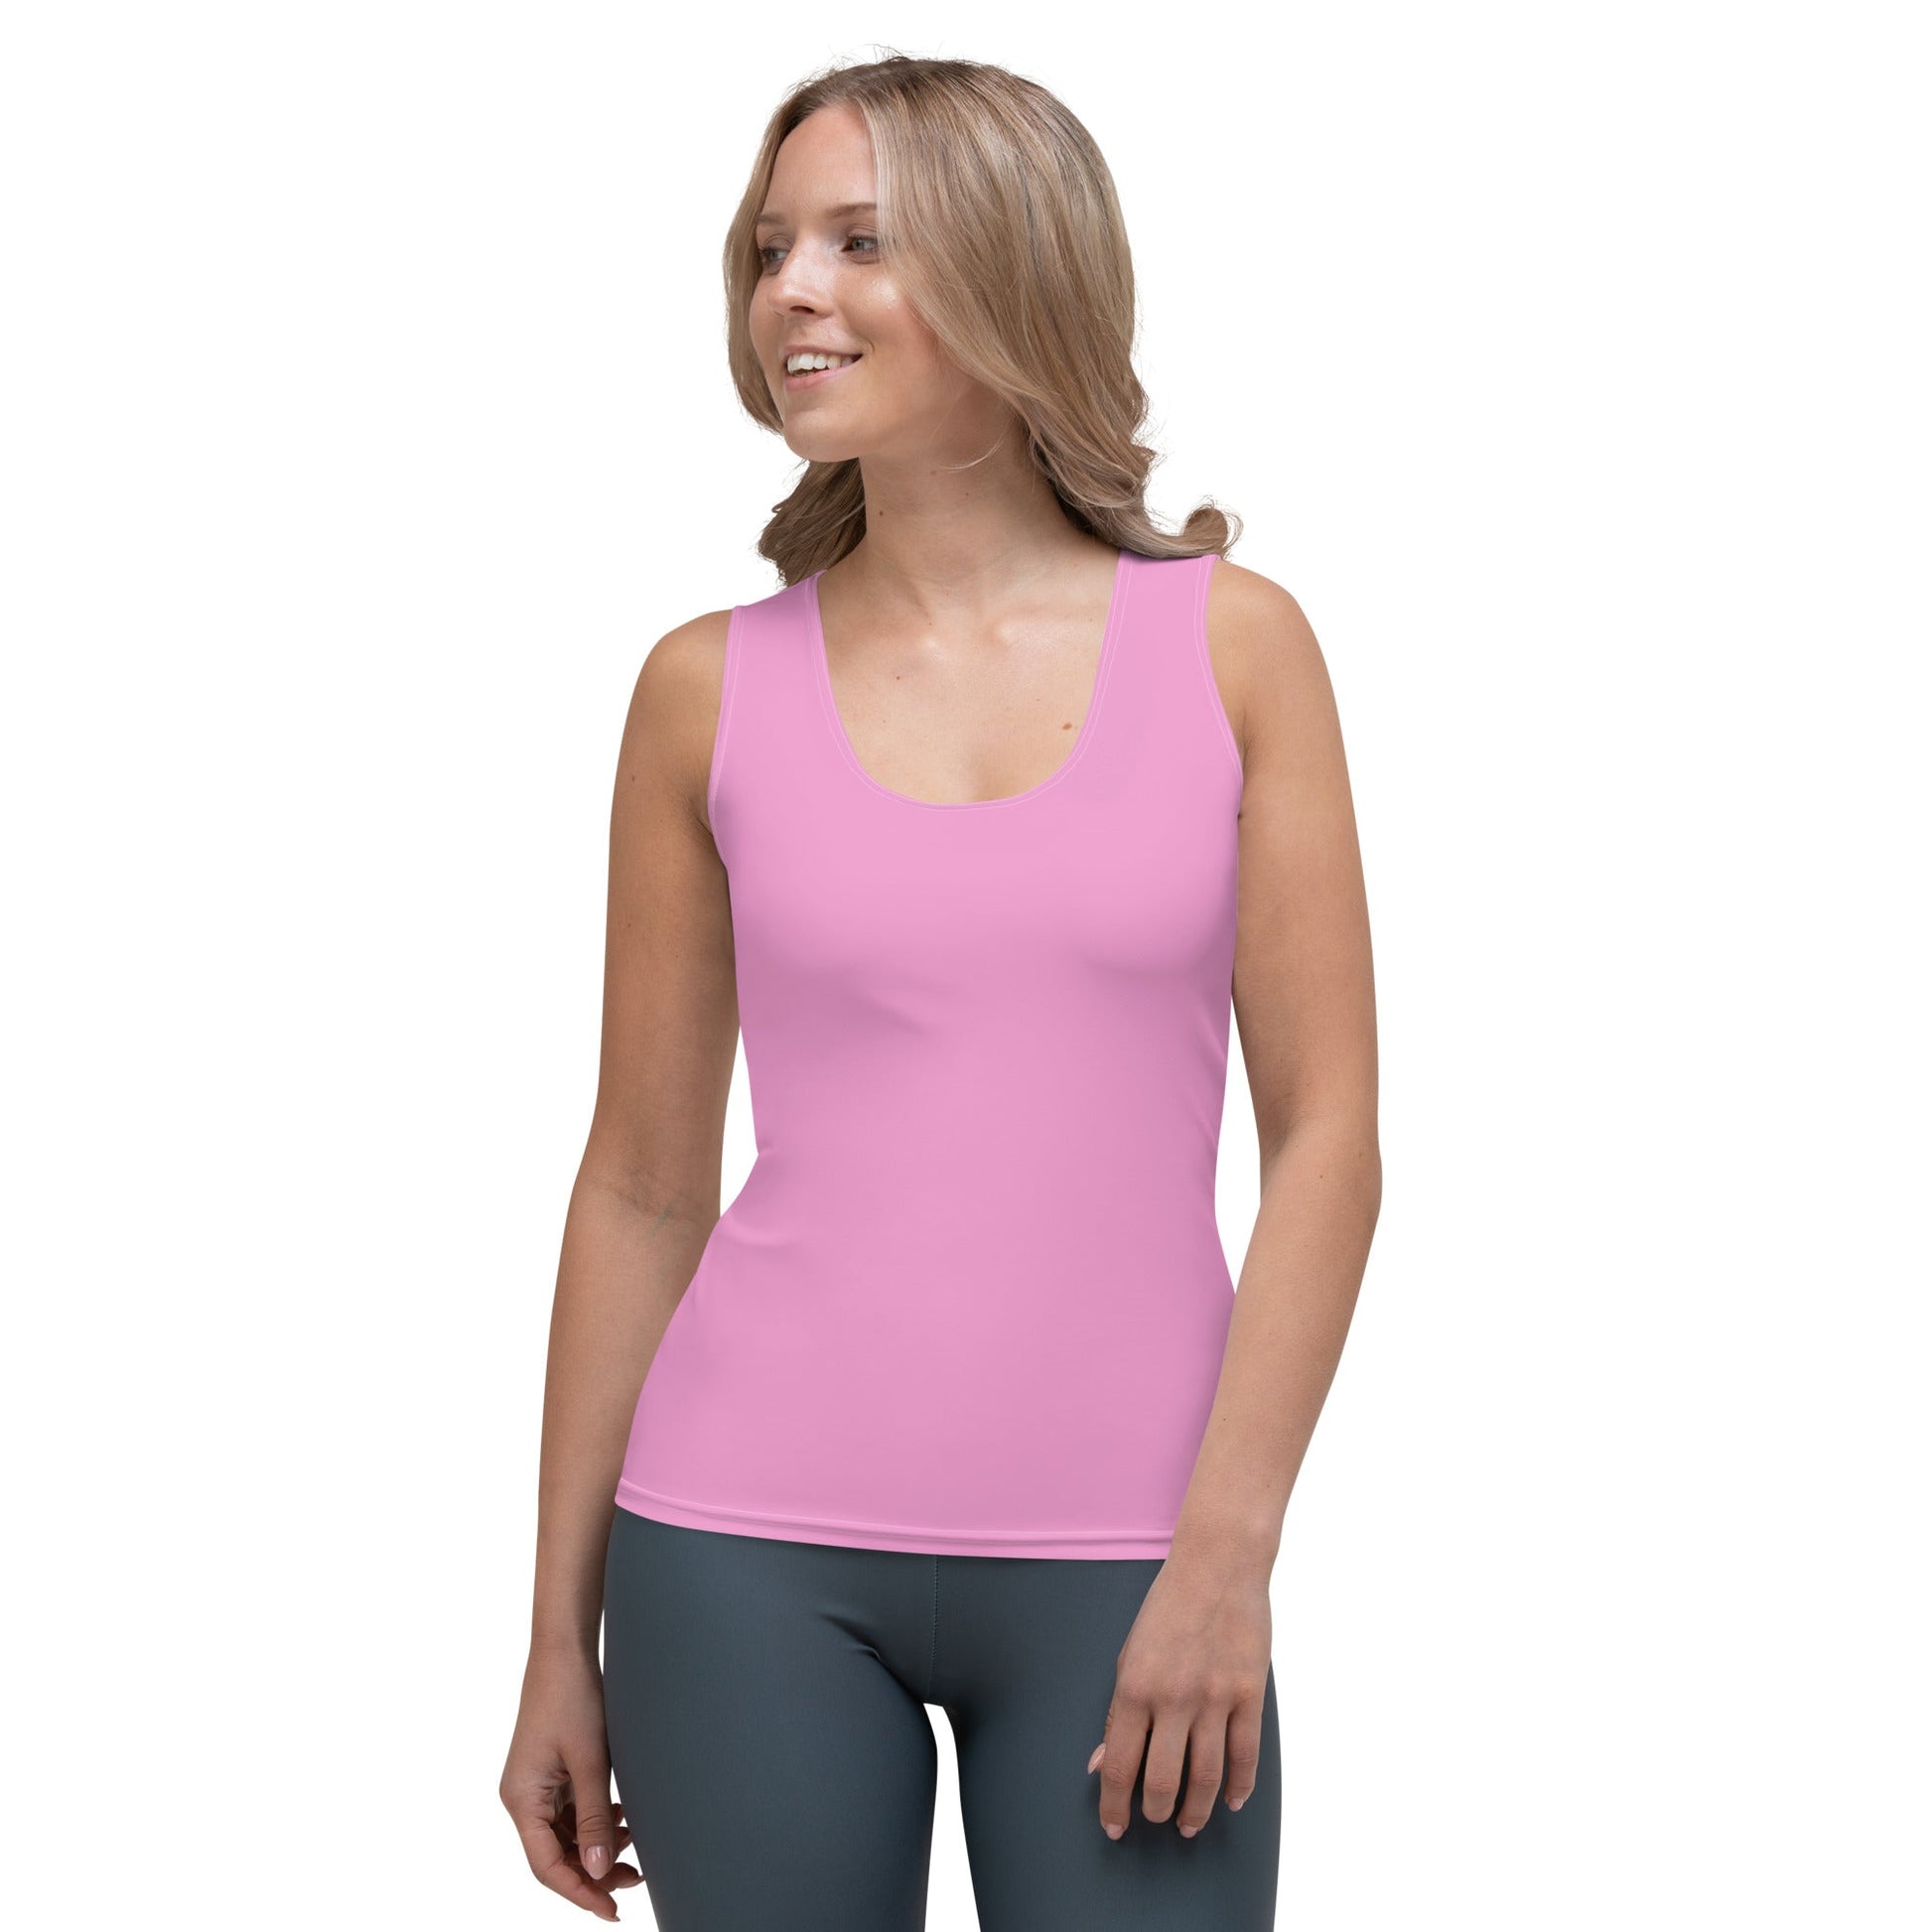 Damen Streetwear Tank Top Pink - BLOODY-STREETS.DE Streetwear Herren und Damen Hoodies, T-Shirts, Pullis